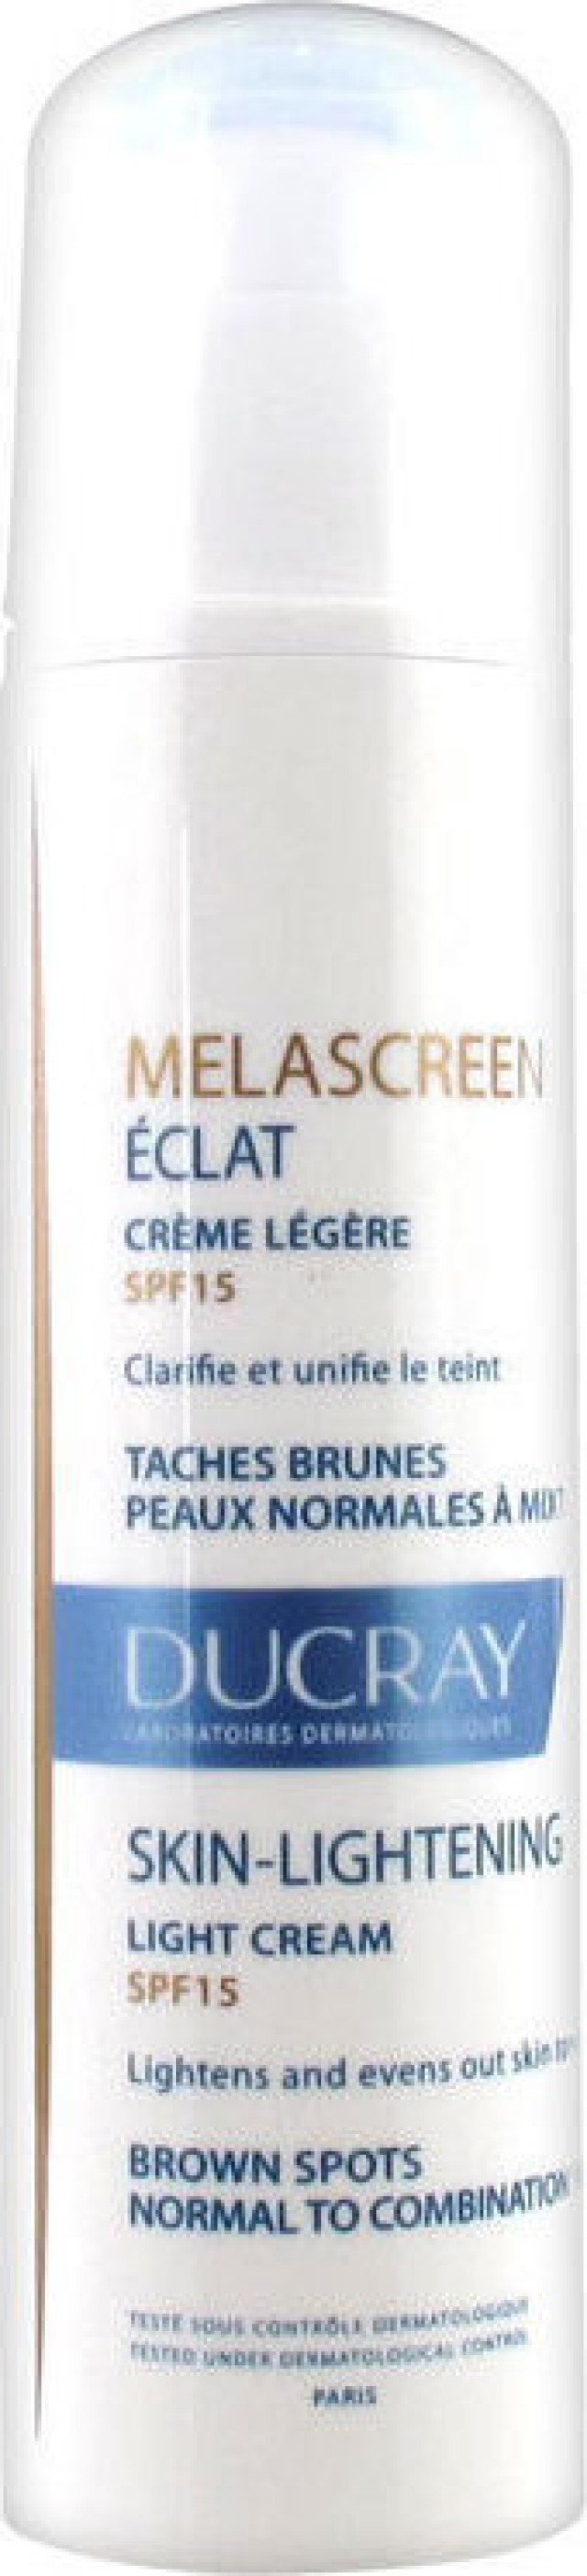 Ducray Melascreen Eclat Creme Legere SPF15 40ml